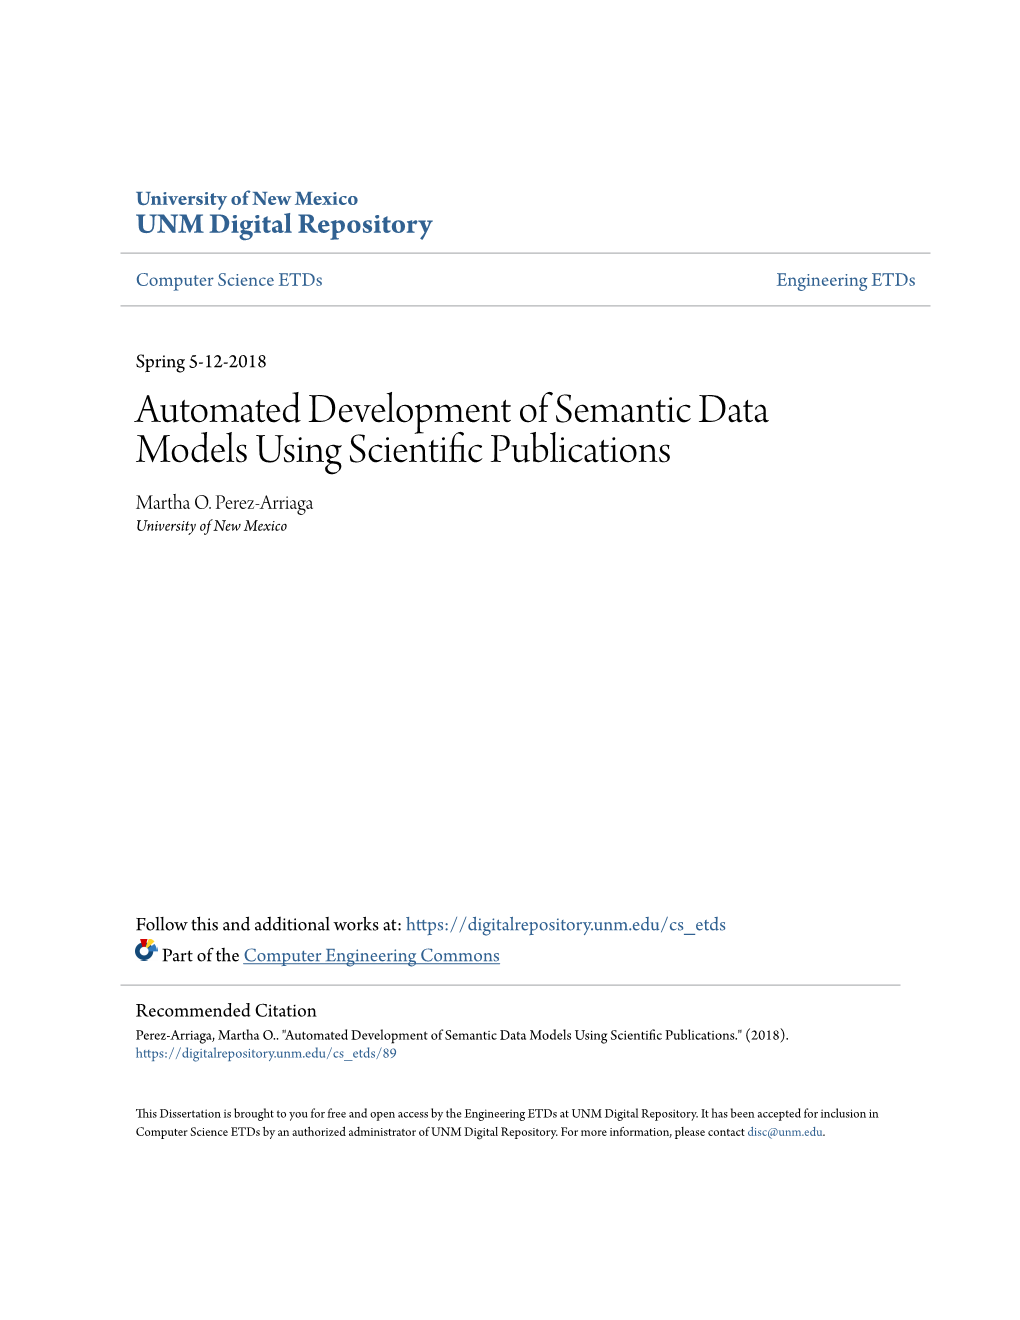 Automated Development of Semantic Data Models Using Scientific Publications Martha O